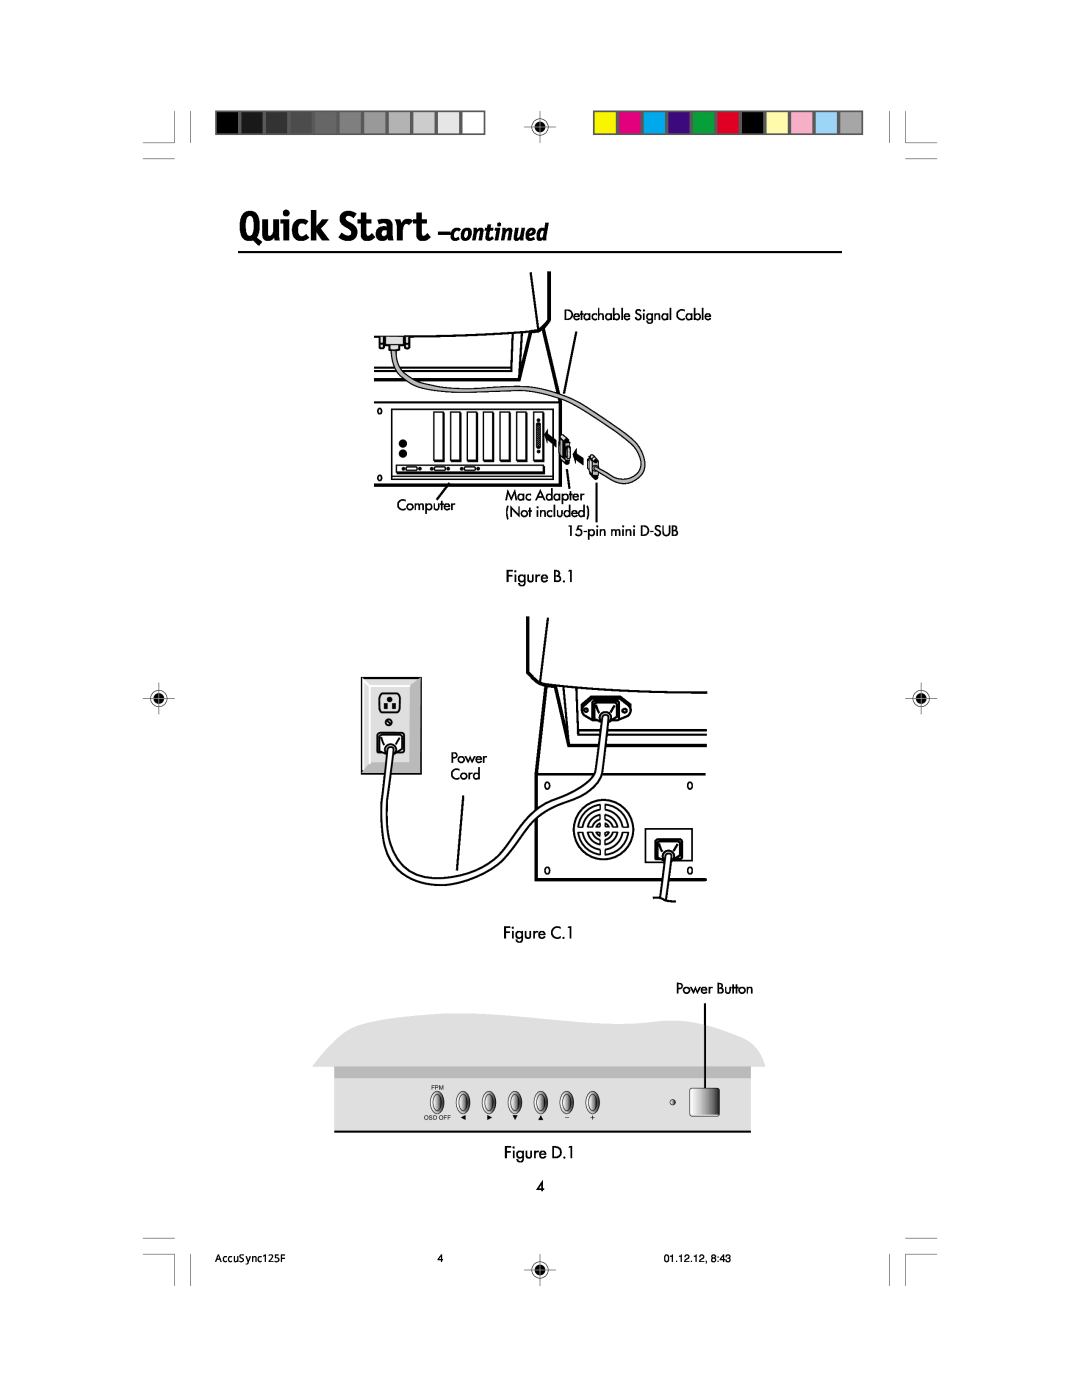 NEC 125F user manual Quick Start -continued, Figure B.1, Figure C.1, Figure D.1, 01.12.12, Fpm Osd Off 